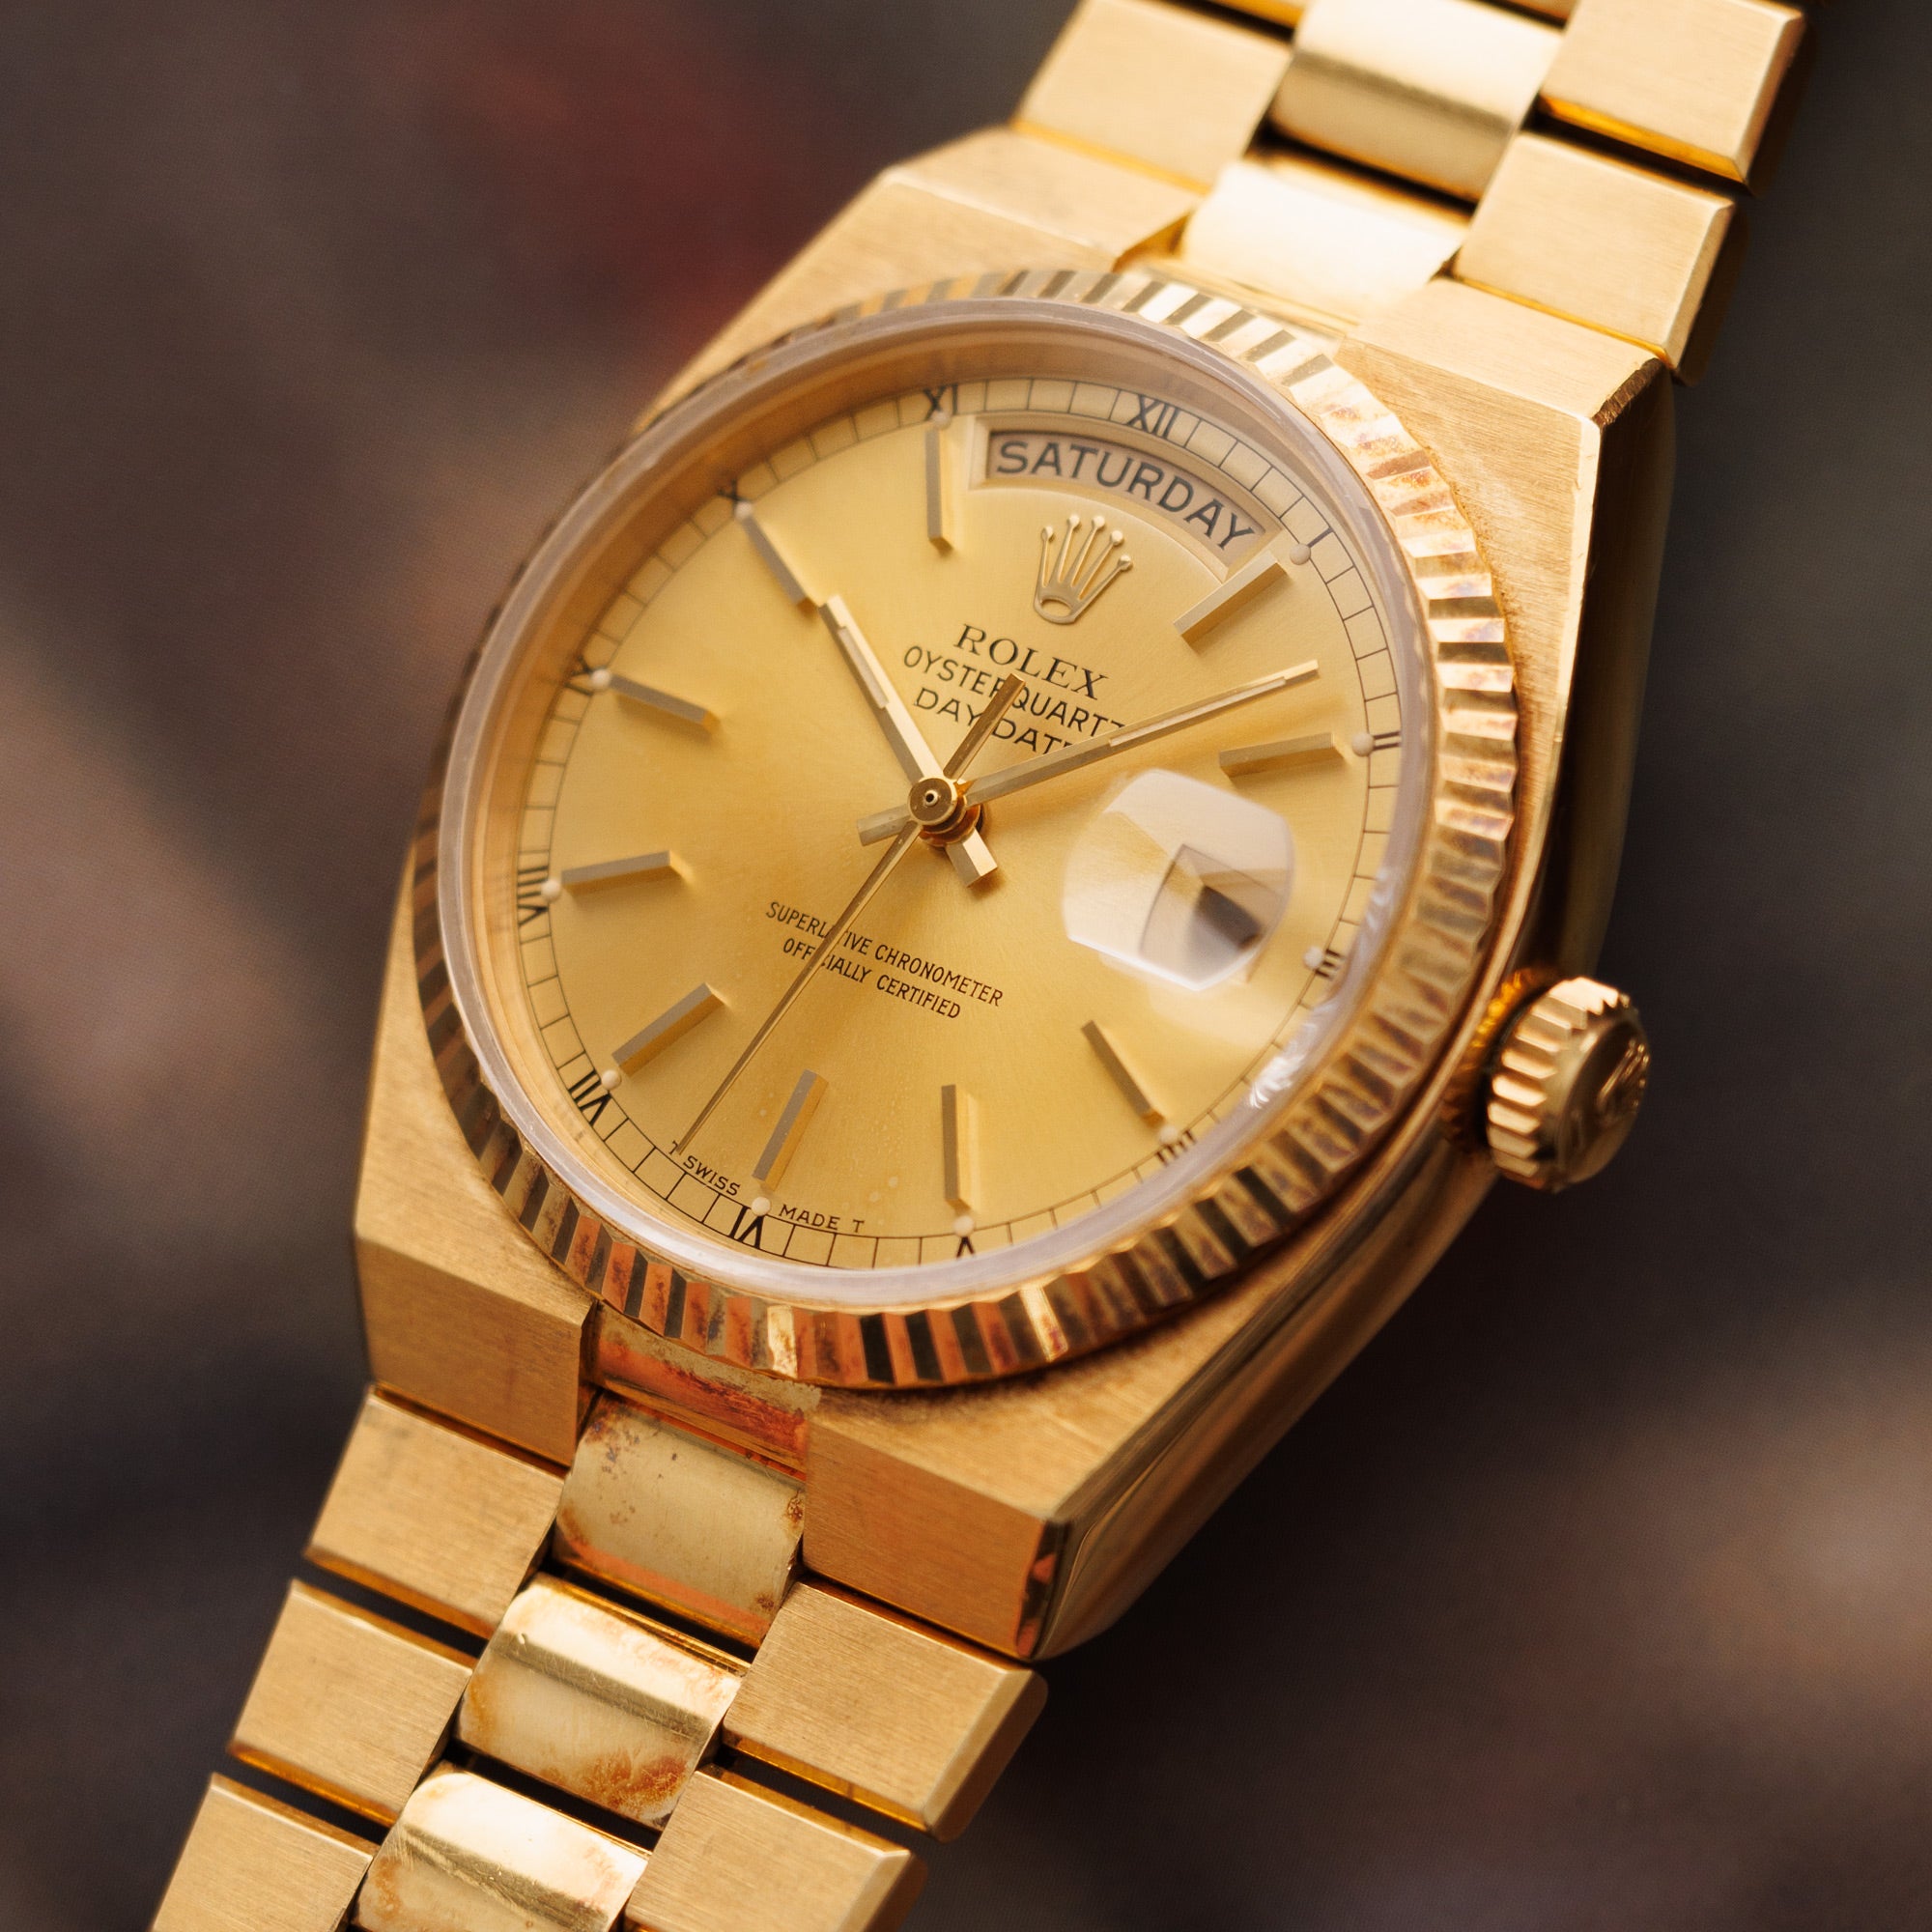 Rolex - Rolex Yellow Gold Day-Date Oysterquartz Ref. 19018 - The Keystone Watches